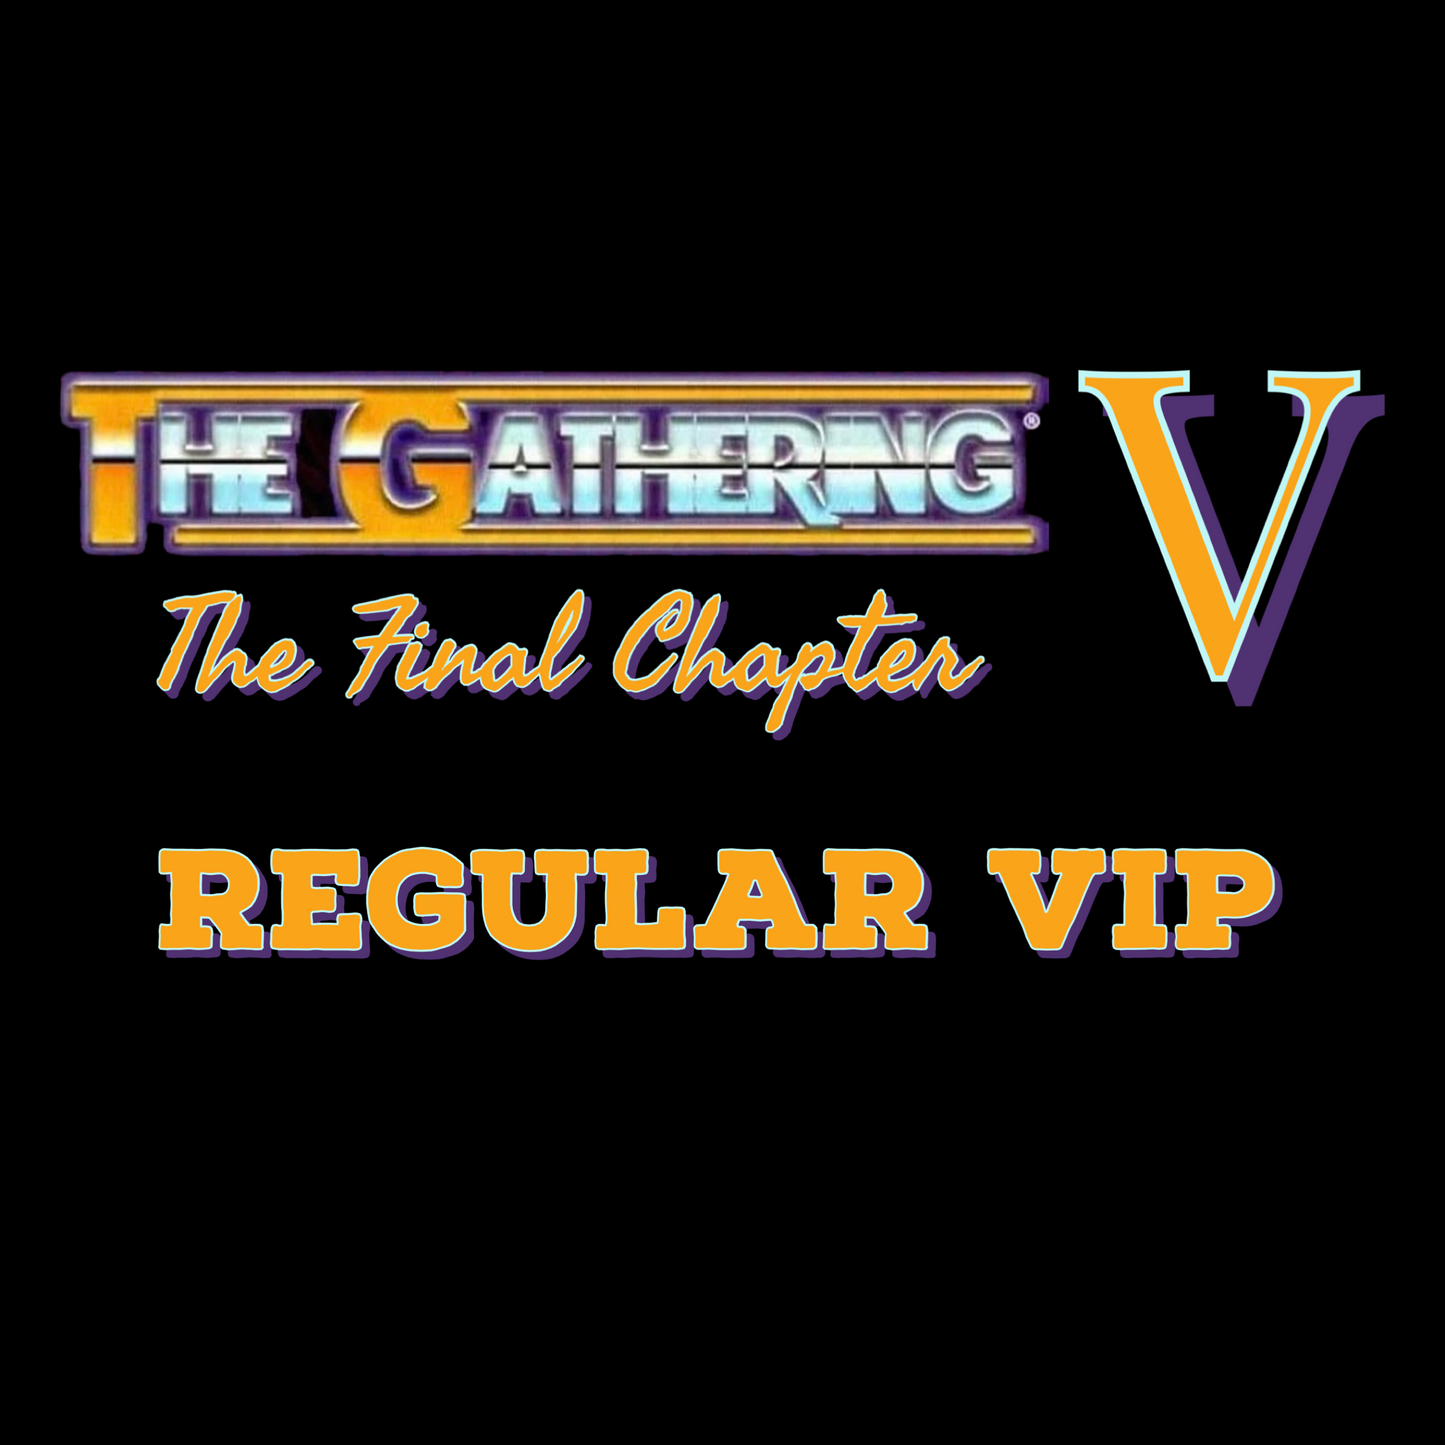 Regular VIP